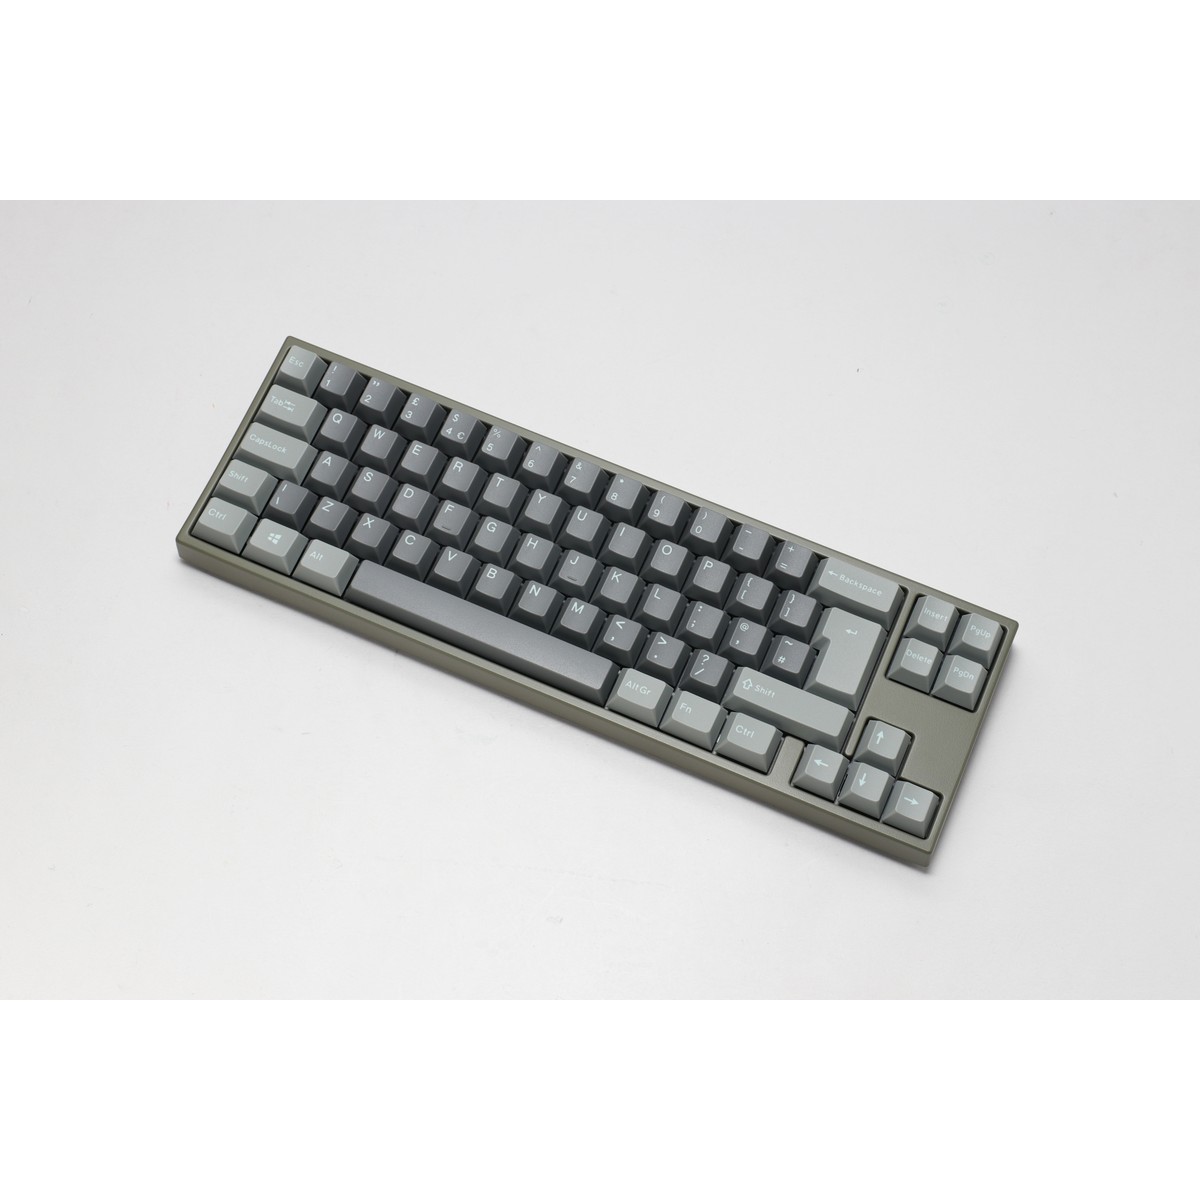 Ducky x Varmilo MIYA 69 Pro Glintstone Mechanical Gaming Keyboard Cherry Speed Silver White Backlight - Olive/Grey